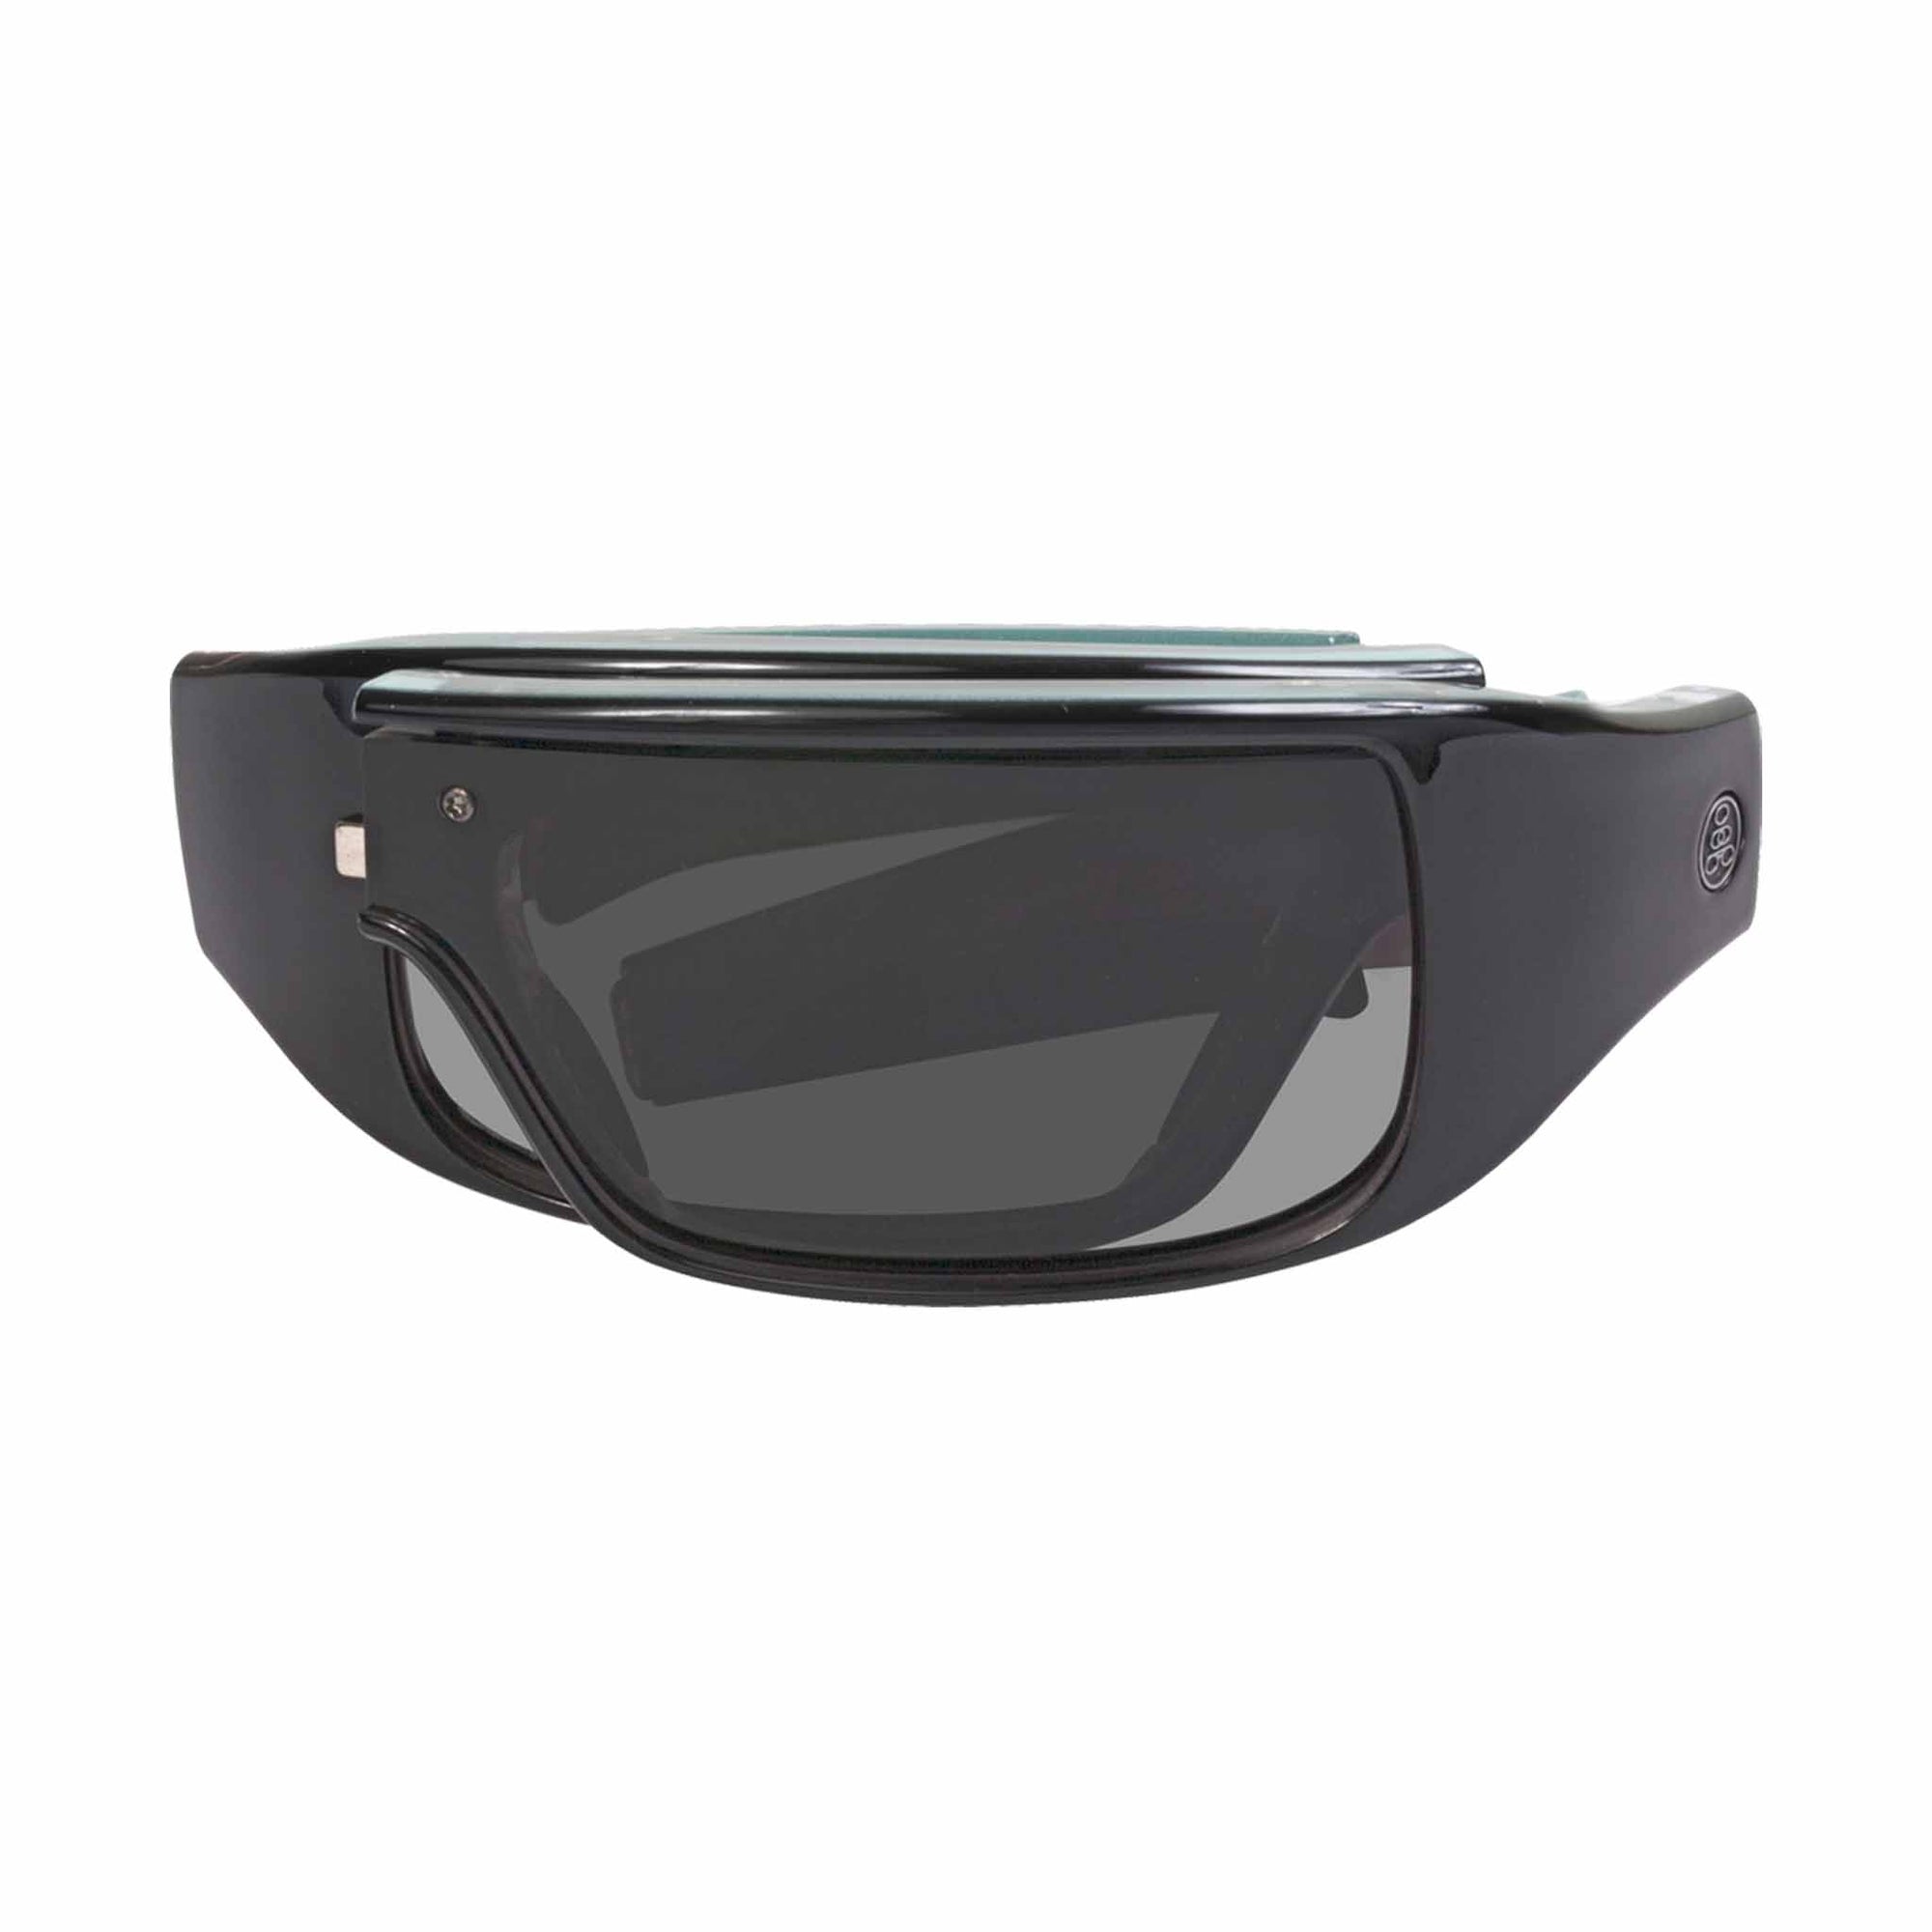 Popticals, Premium Compact Sunglasses, PopGear, 040051-ULGP, Polarized Sunglasses, Gloss Black over Blue Crystal Frame , Gray Lenses, Compact View